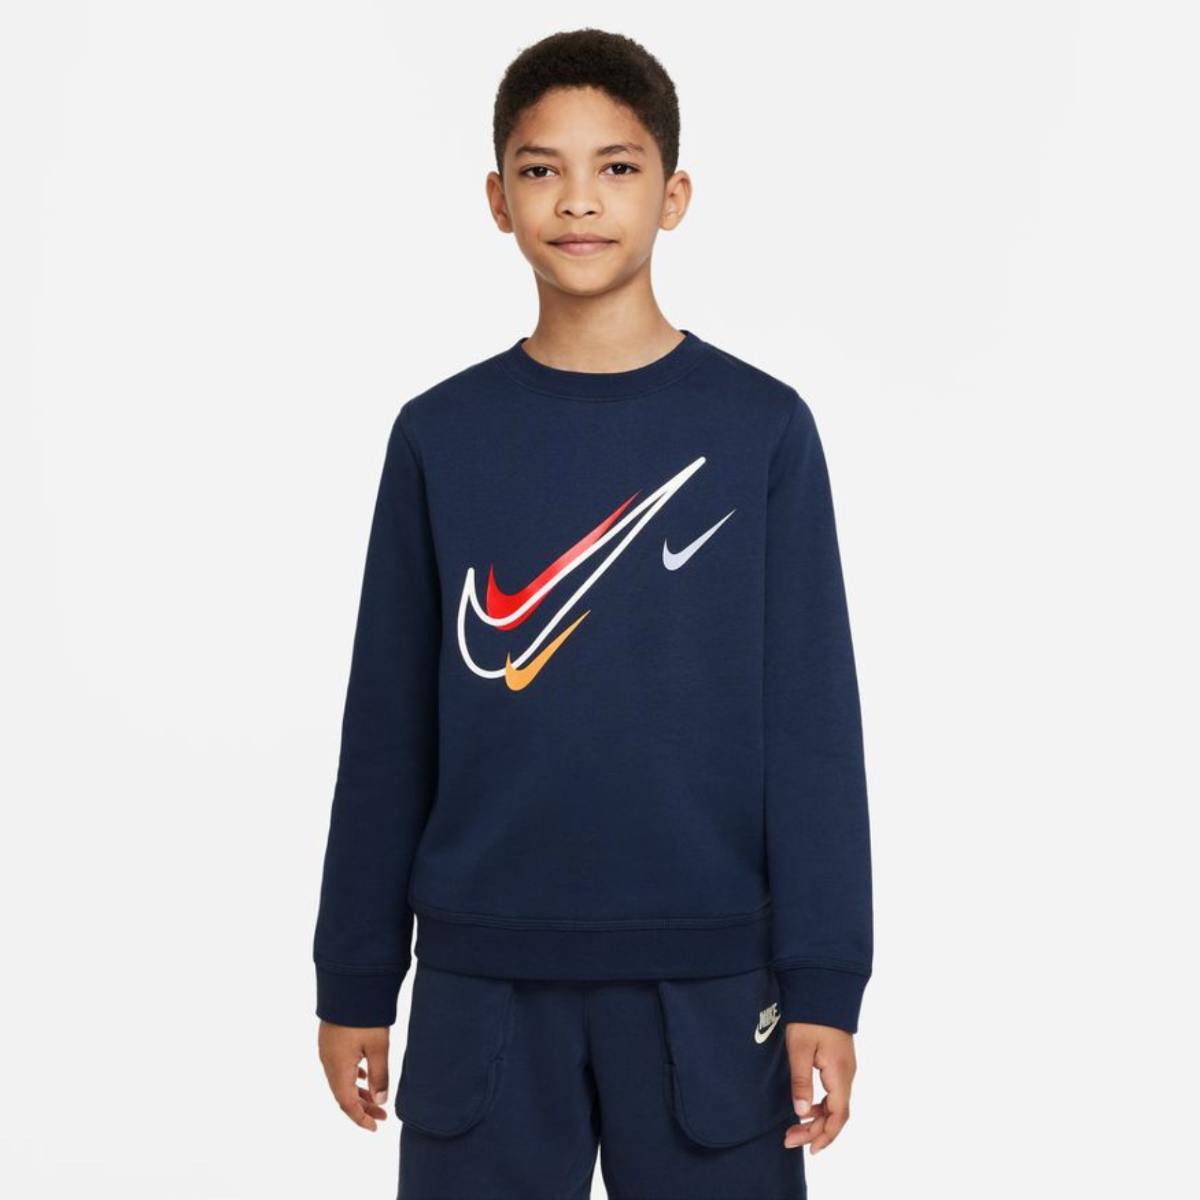 Felpa Nike Tech Fleece Junior - Navy